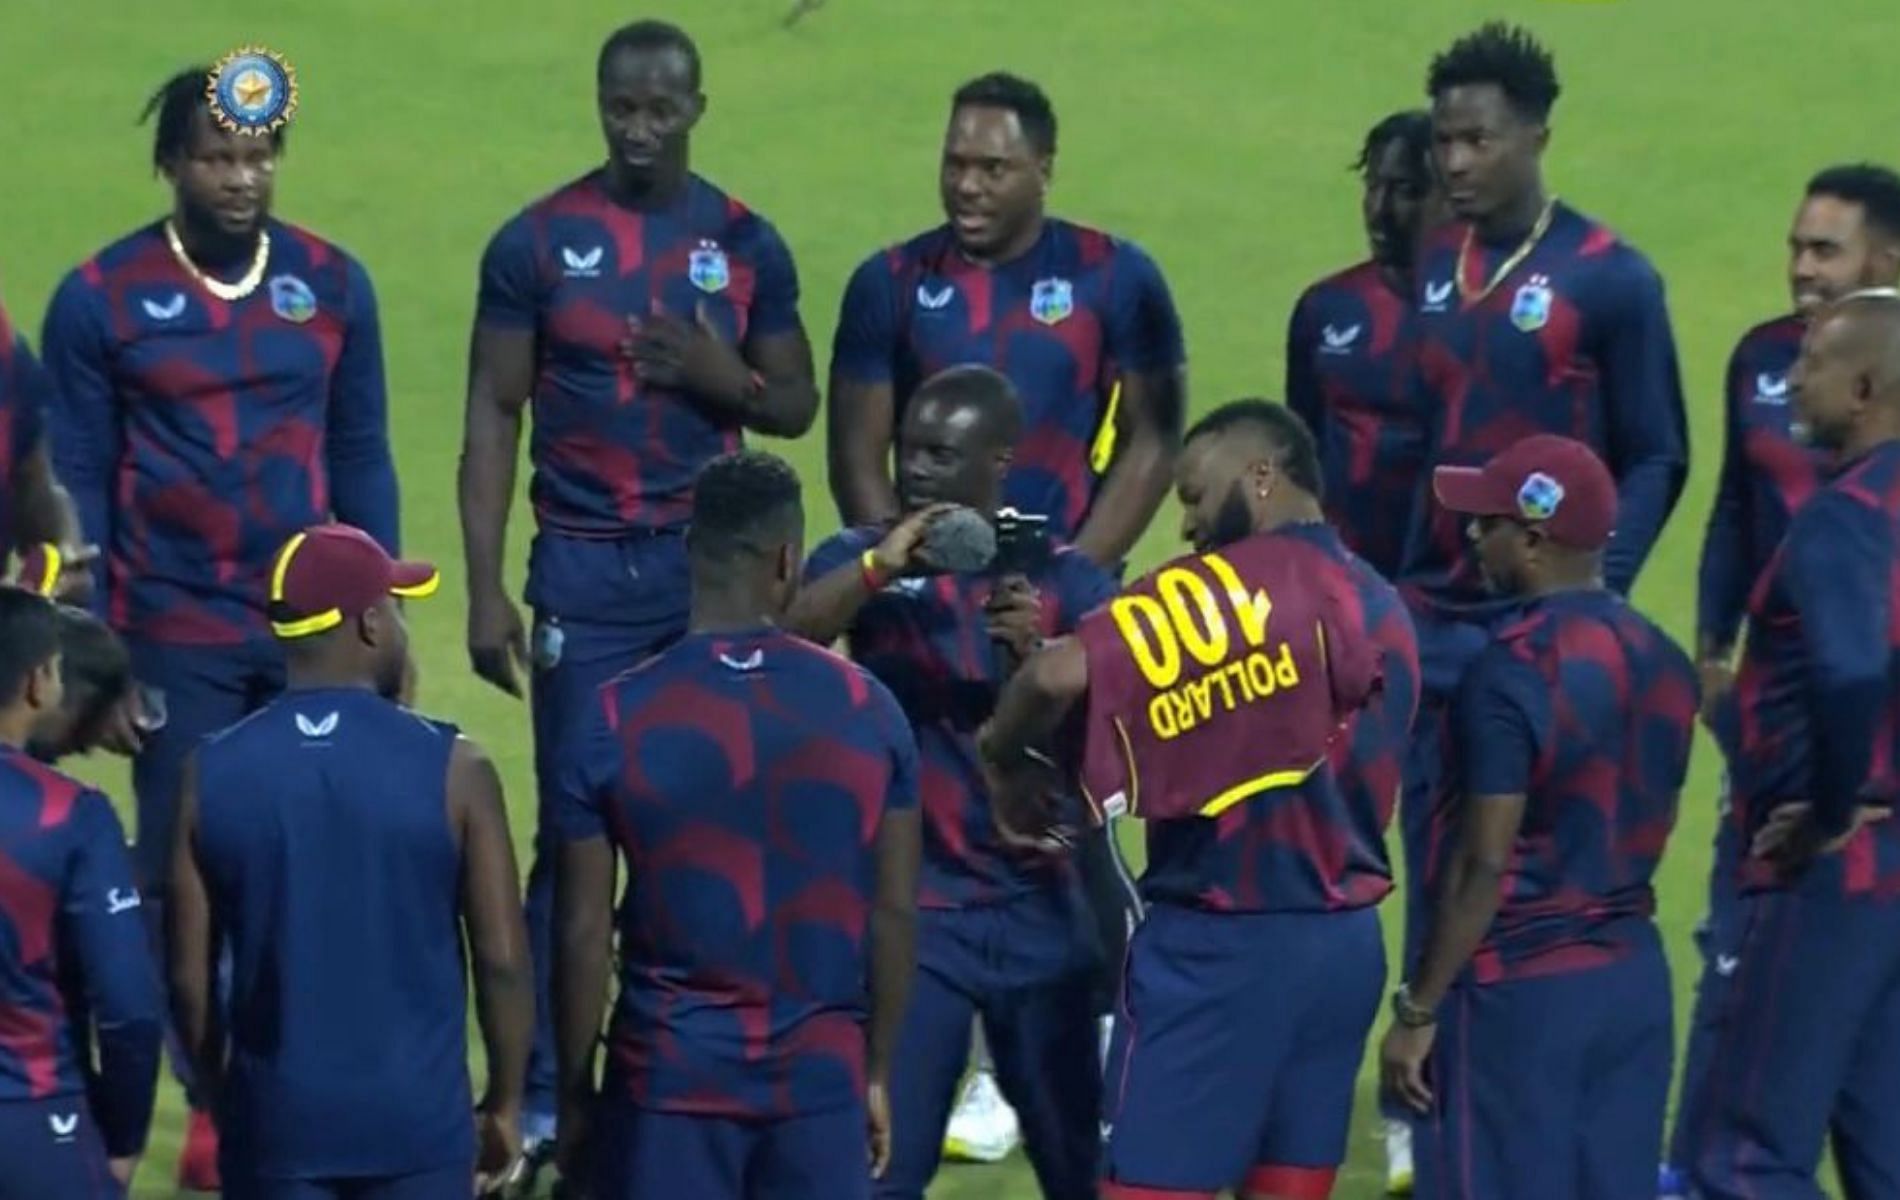 West Indies cricket team. (Image source: BCCI)